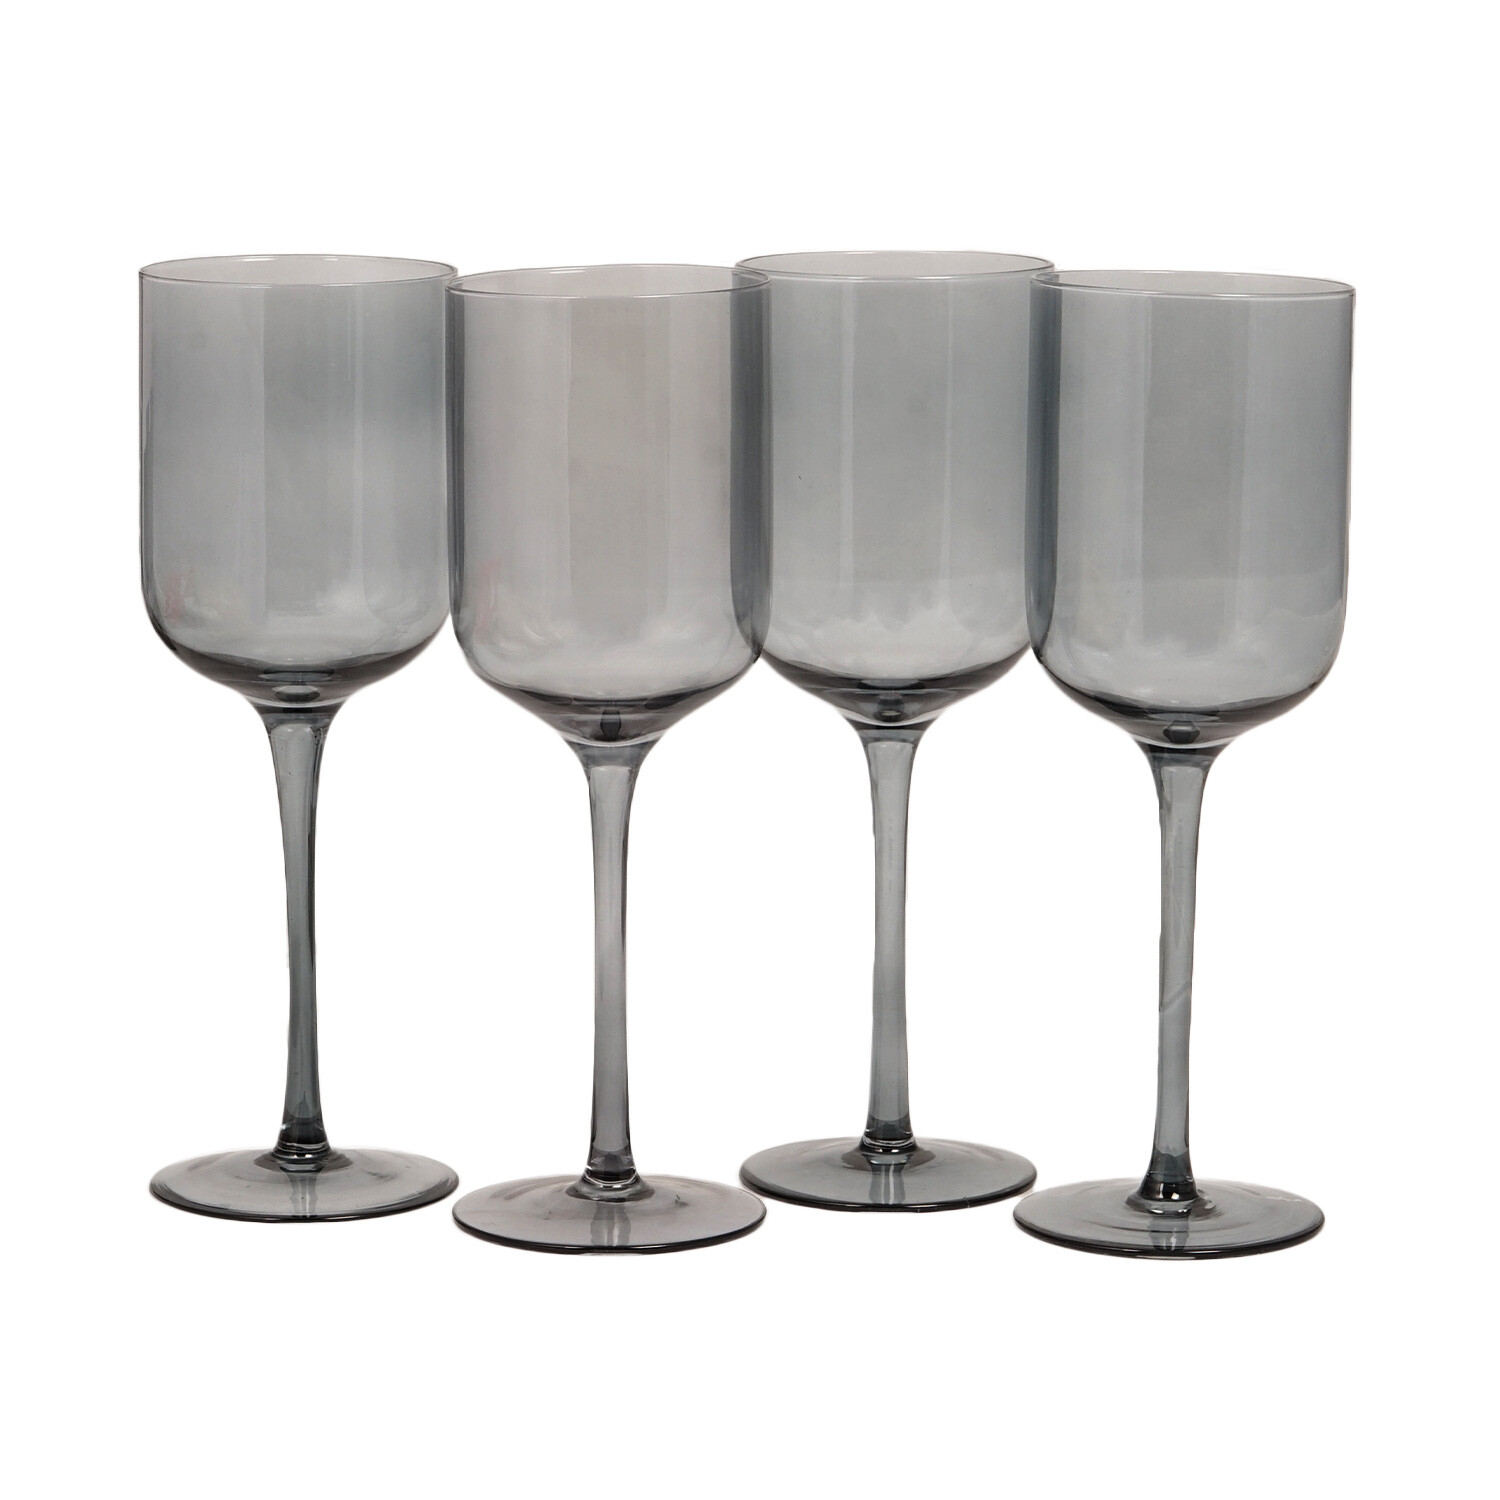 Set of 4 Retreat Wine Glasses - Smoke Image 4